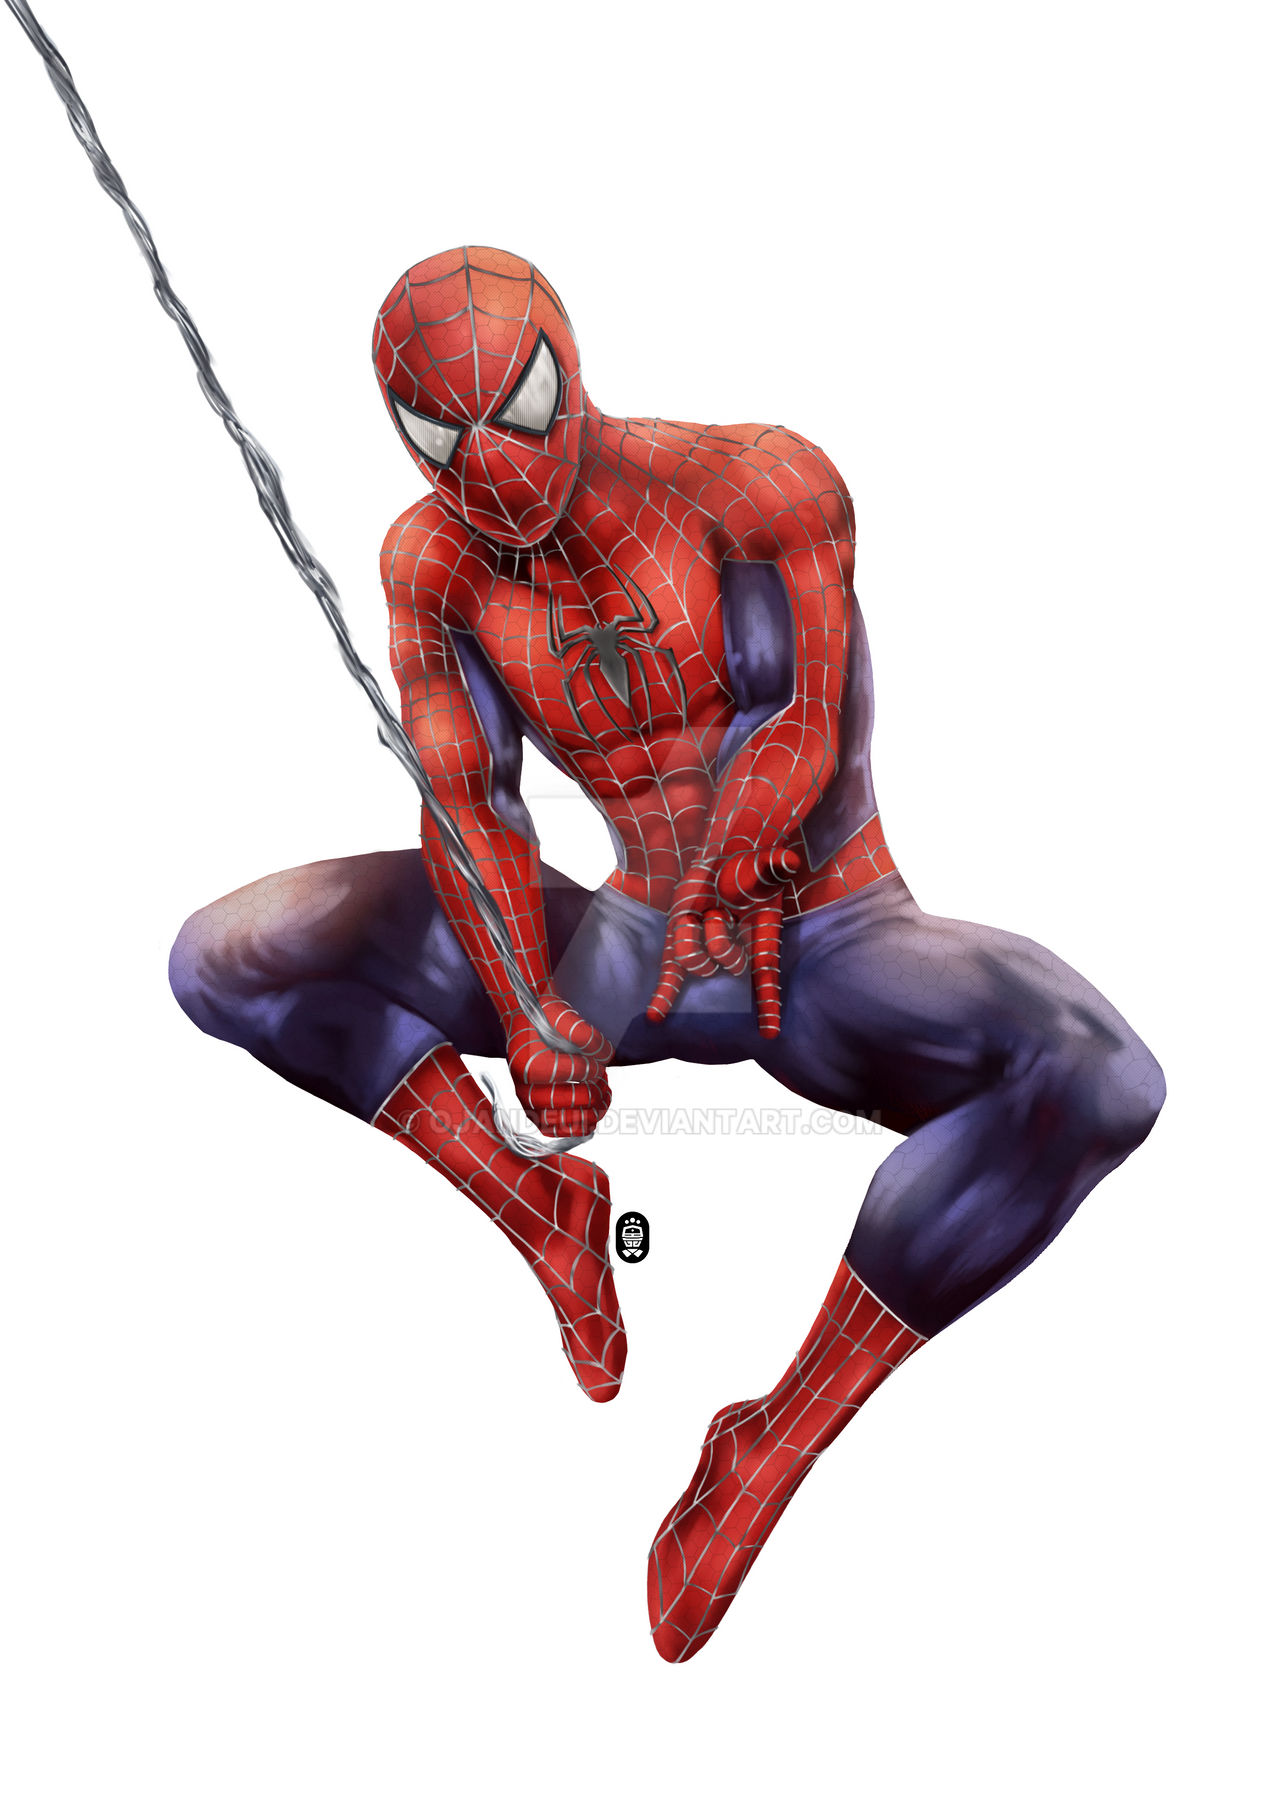 Sam Raimi - Spiderman Fan Art by ojandeui on DeviantArt